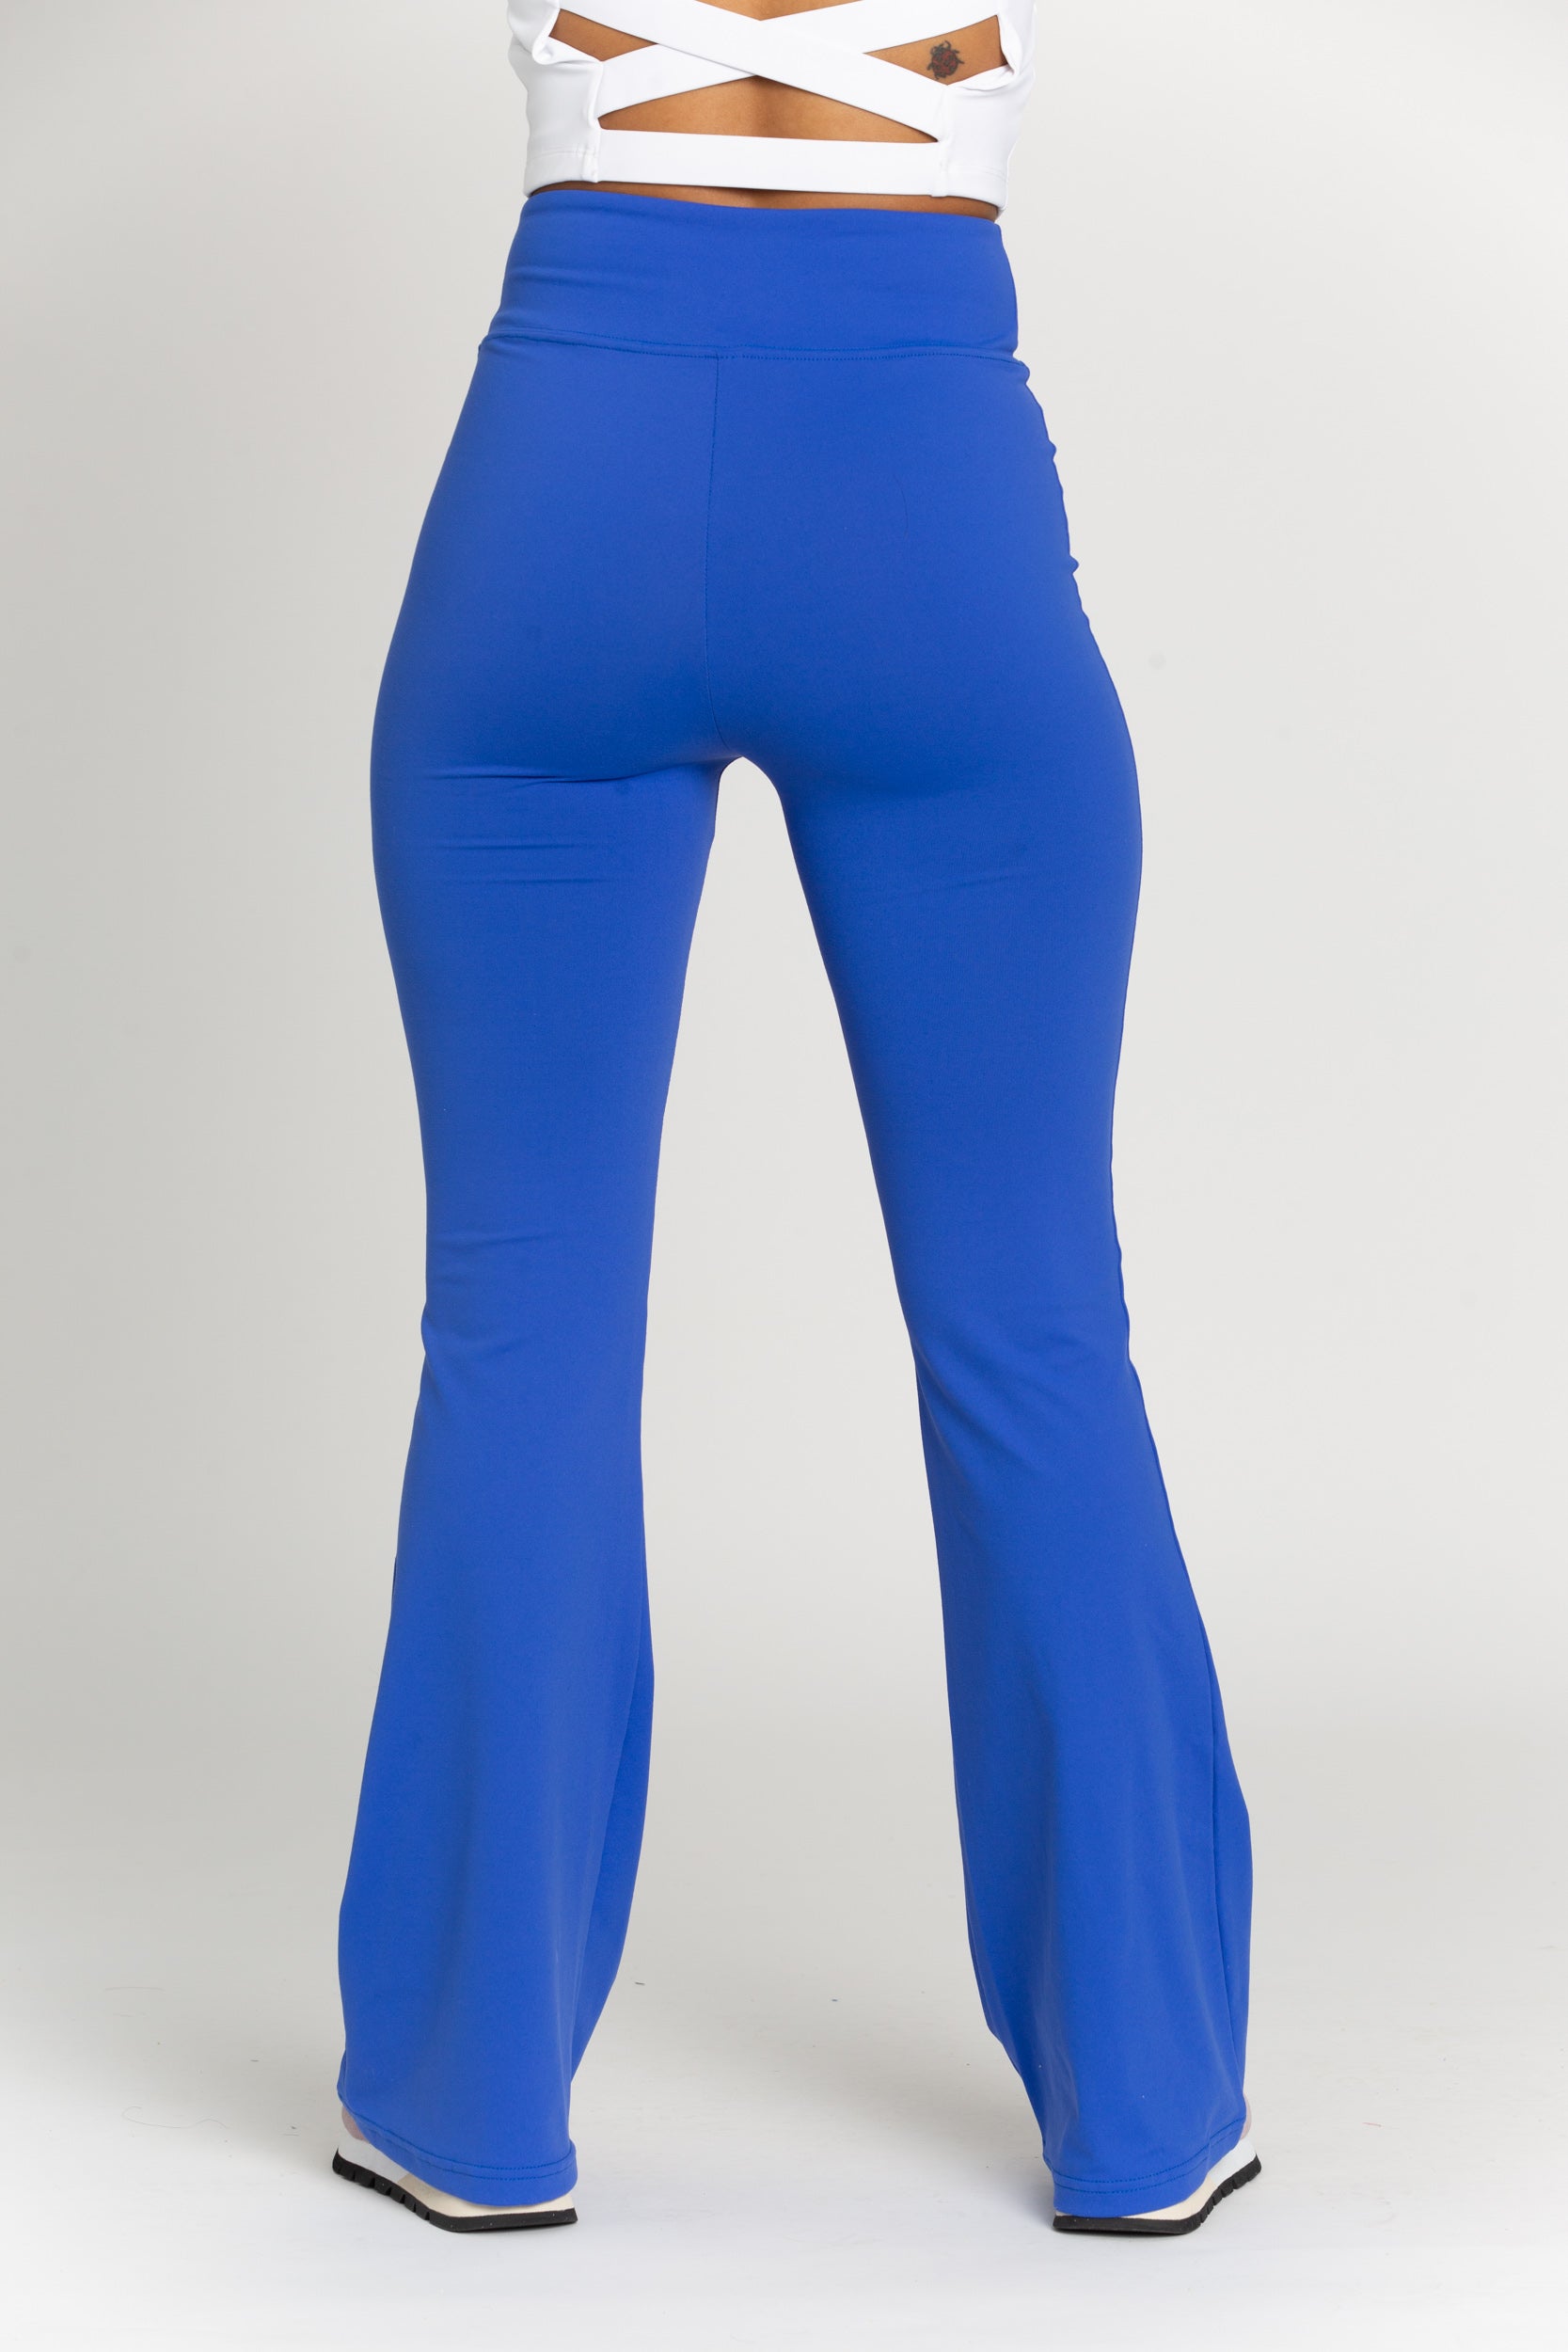 Cobalt Streetwear Flare Yoga Pants